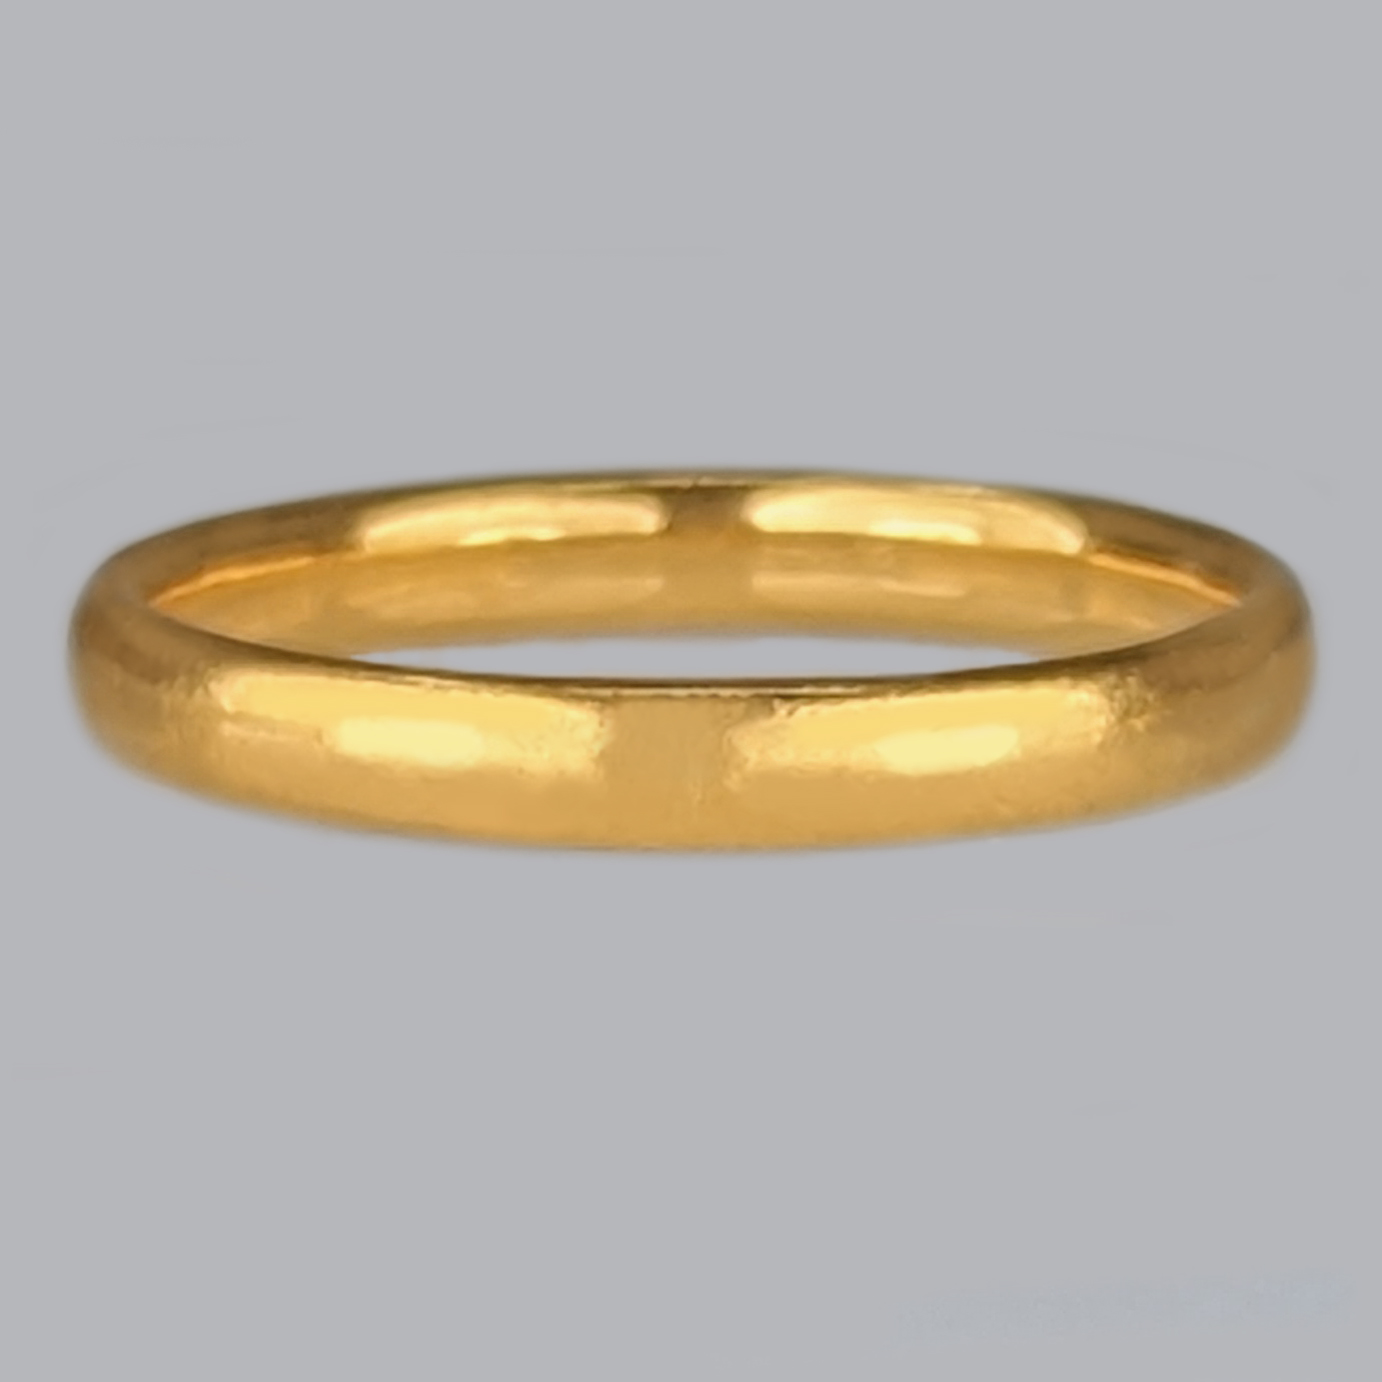 Victorian 22ct Wedding Ring 1885 - The Chelsea Bijouterie